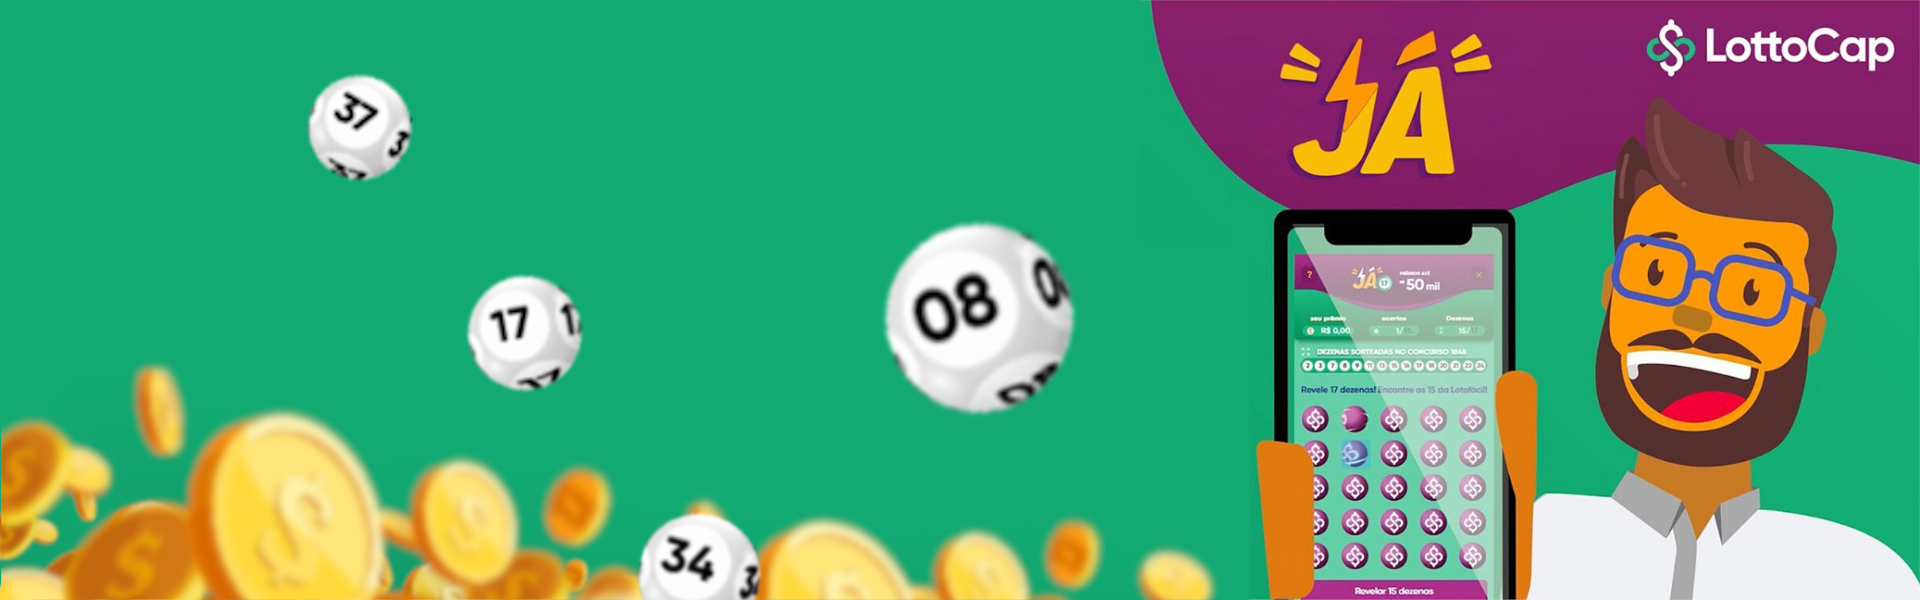 LottoCap: Jogue e se divirta